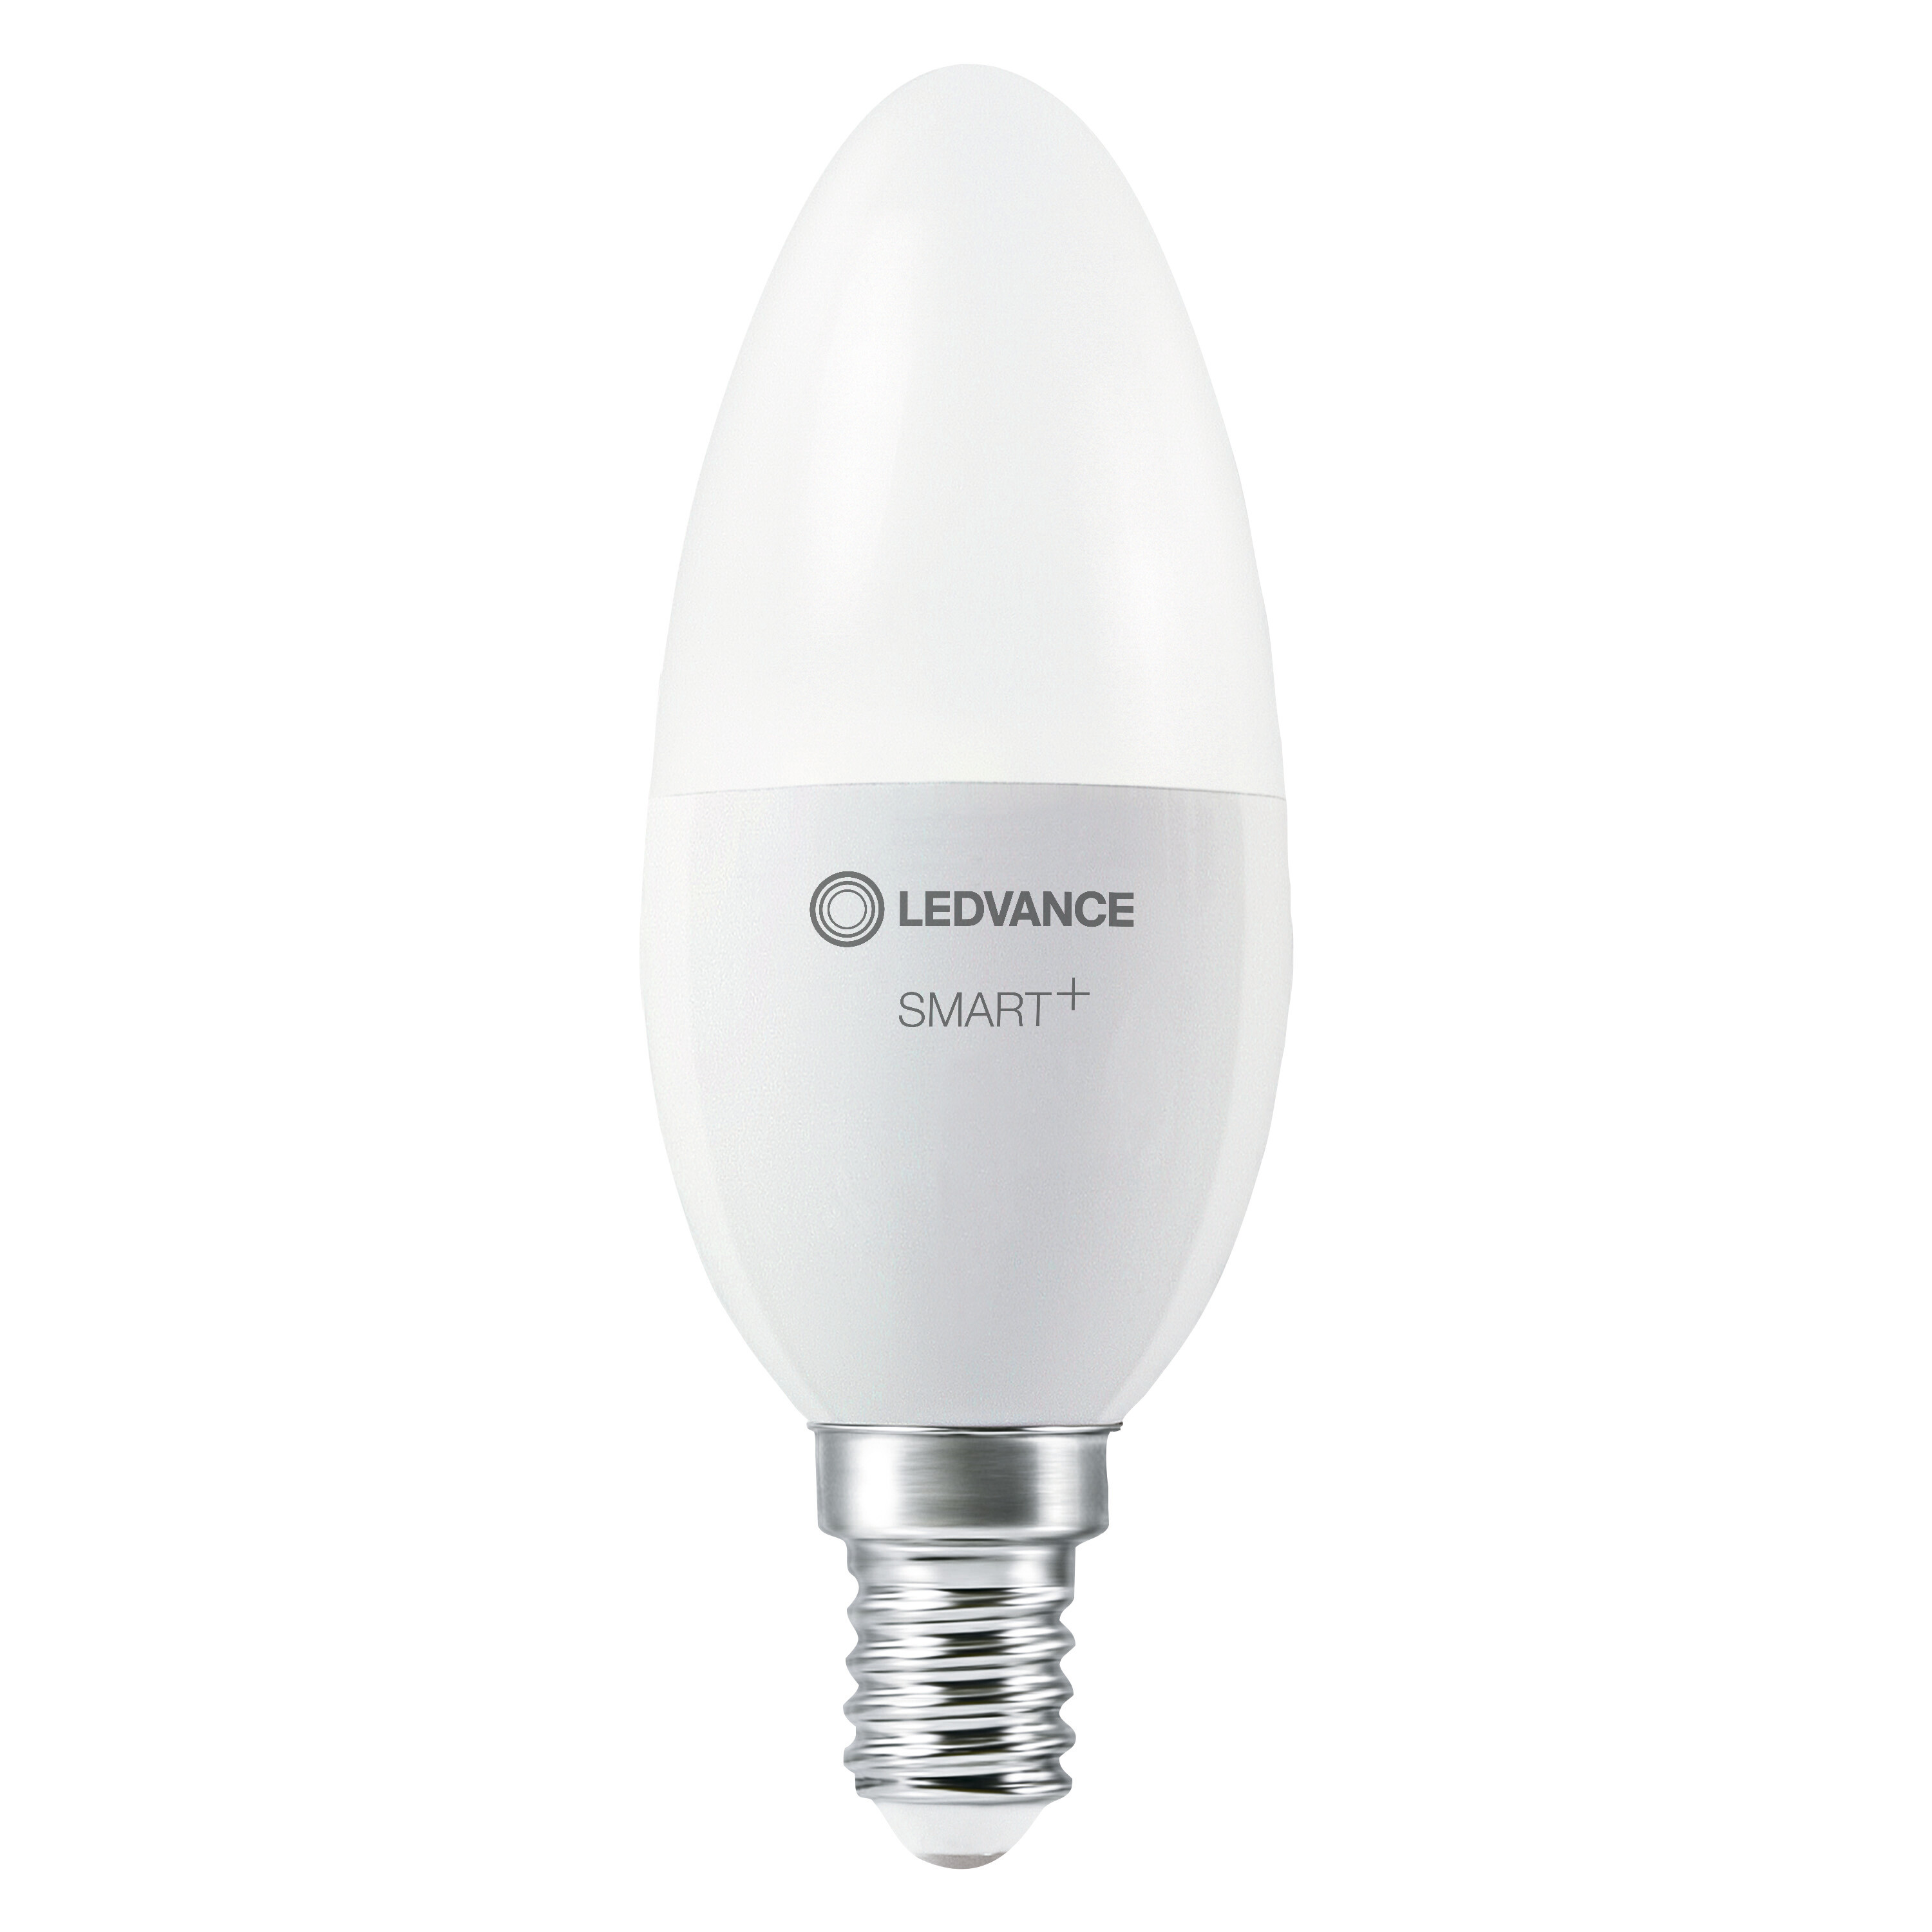 LED Lichtfarbe White änderbar LEDVANCE Candle Lampe Tunable SMART+